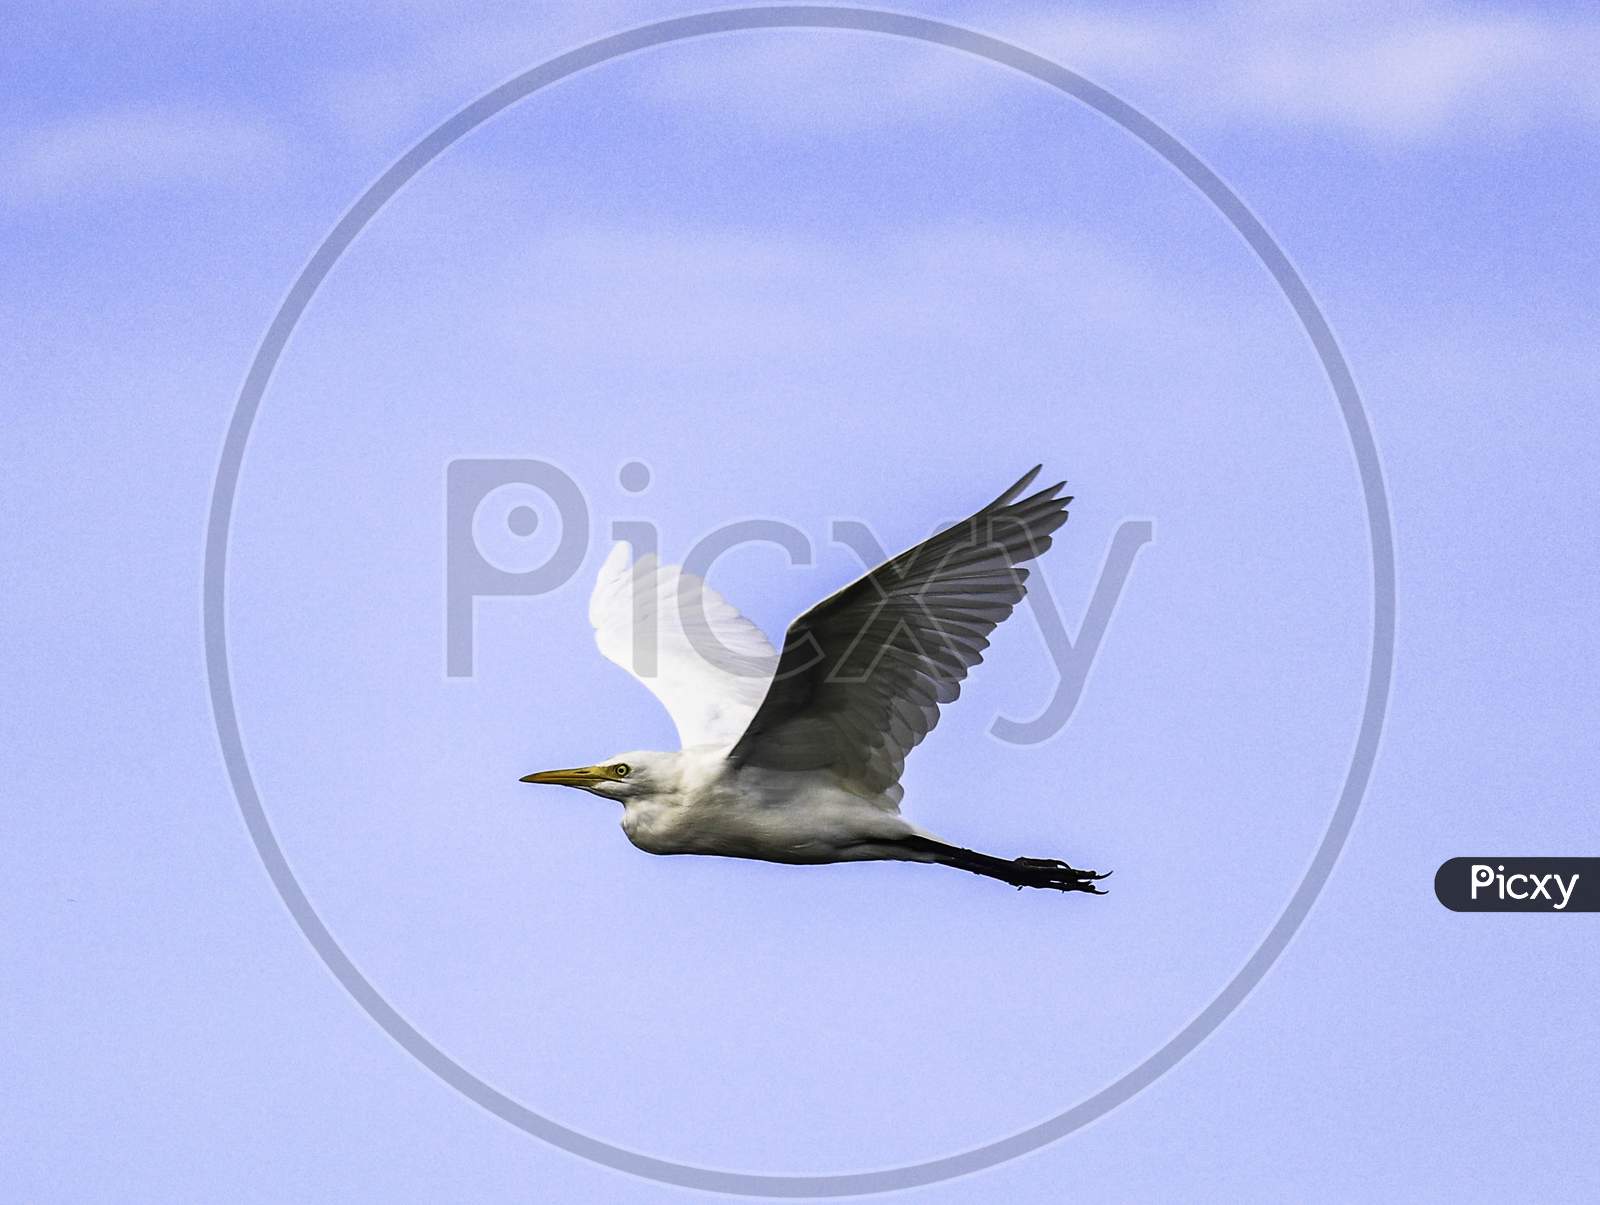 Great white Egret